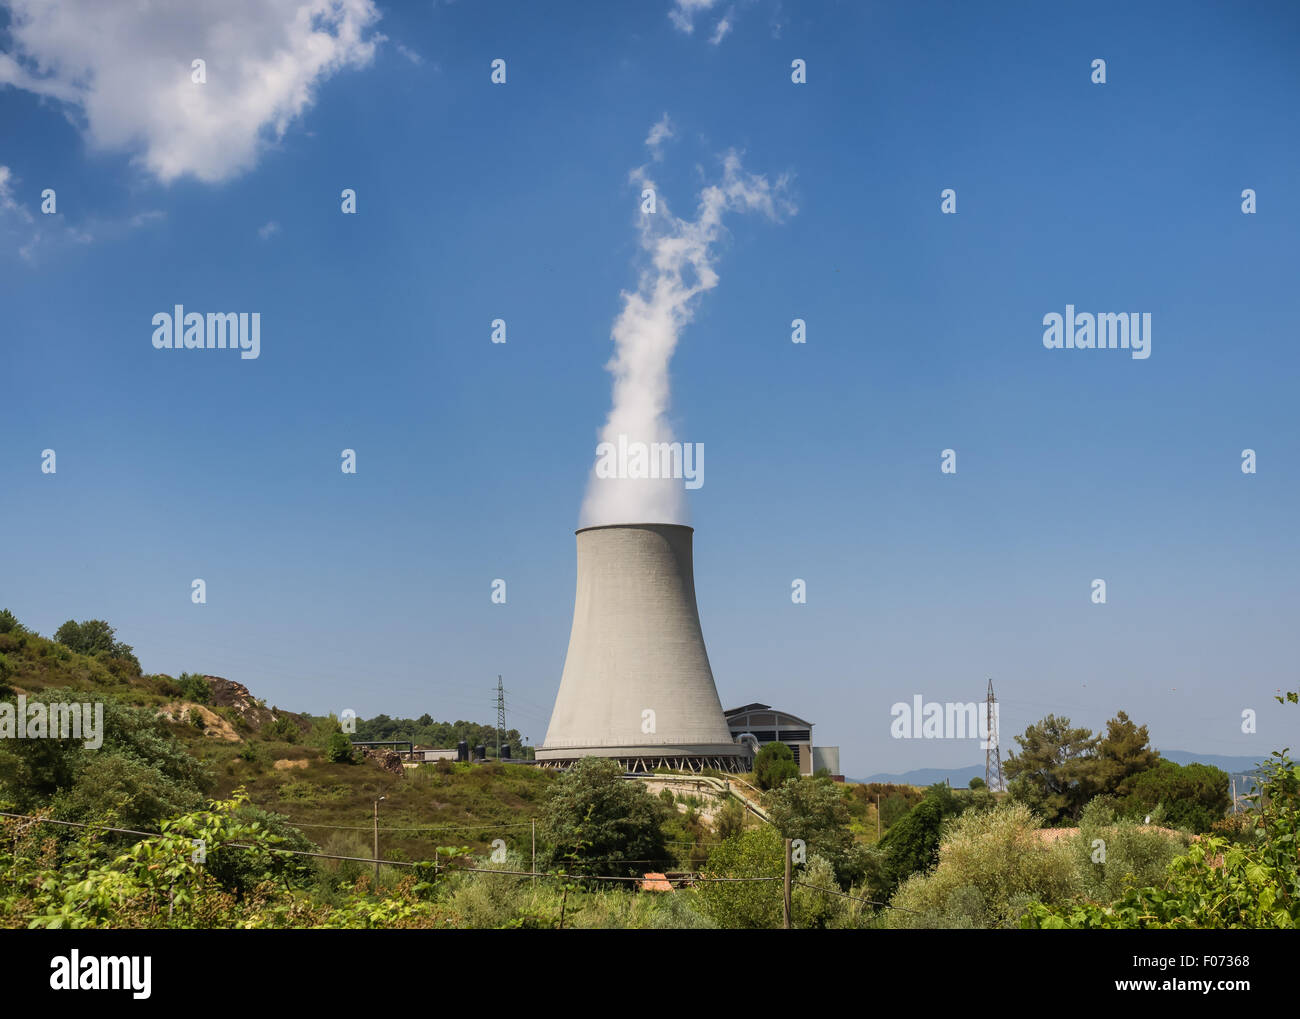 Geothermal power plant in Sasso Pisano, Tuscany - Italy Stock Photo